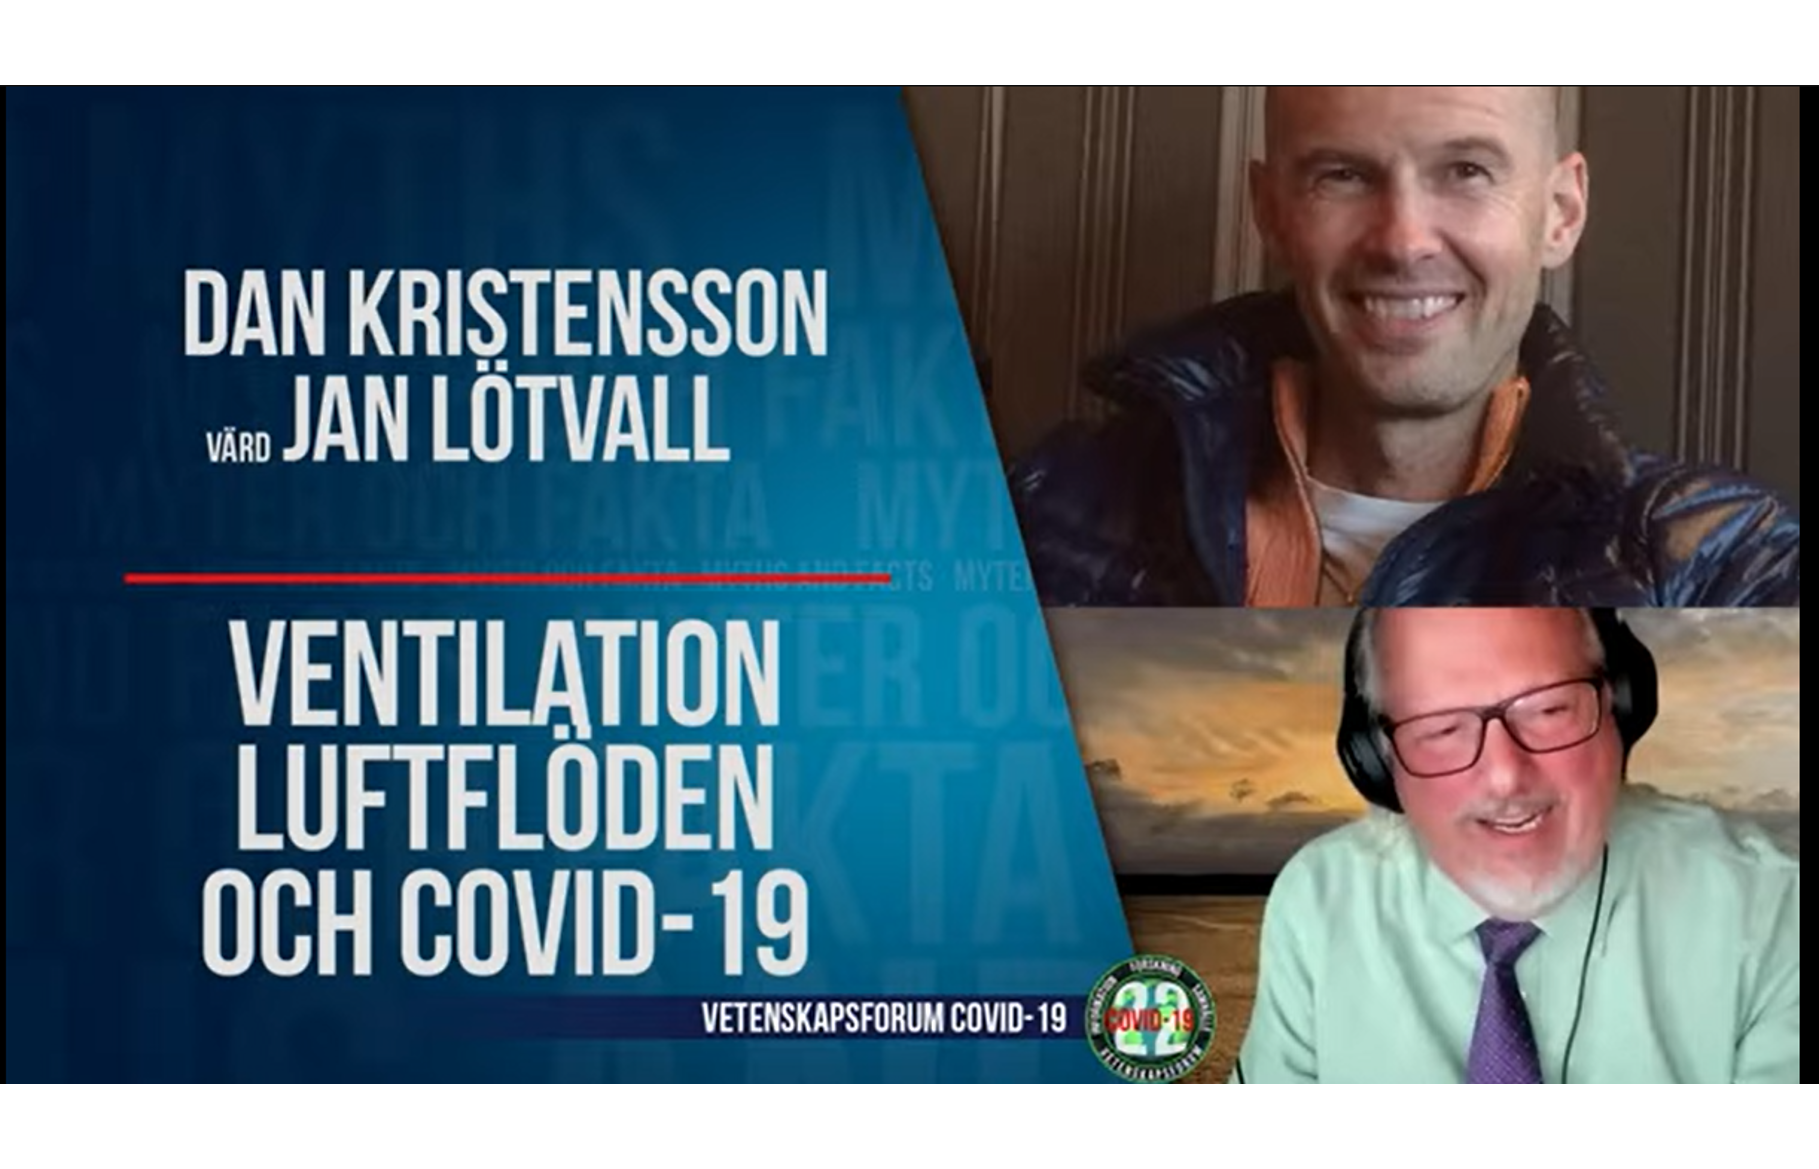 Dan Kristensson interview